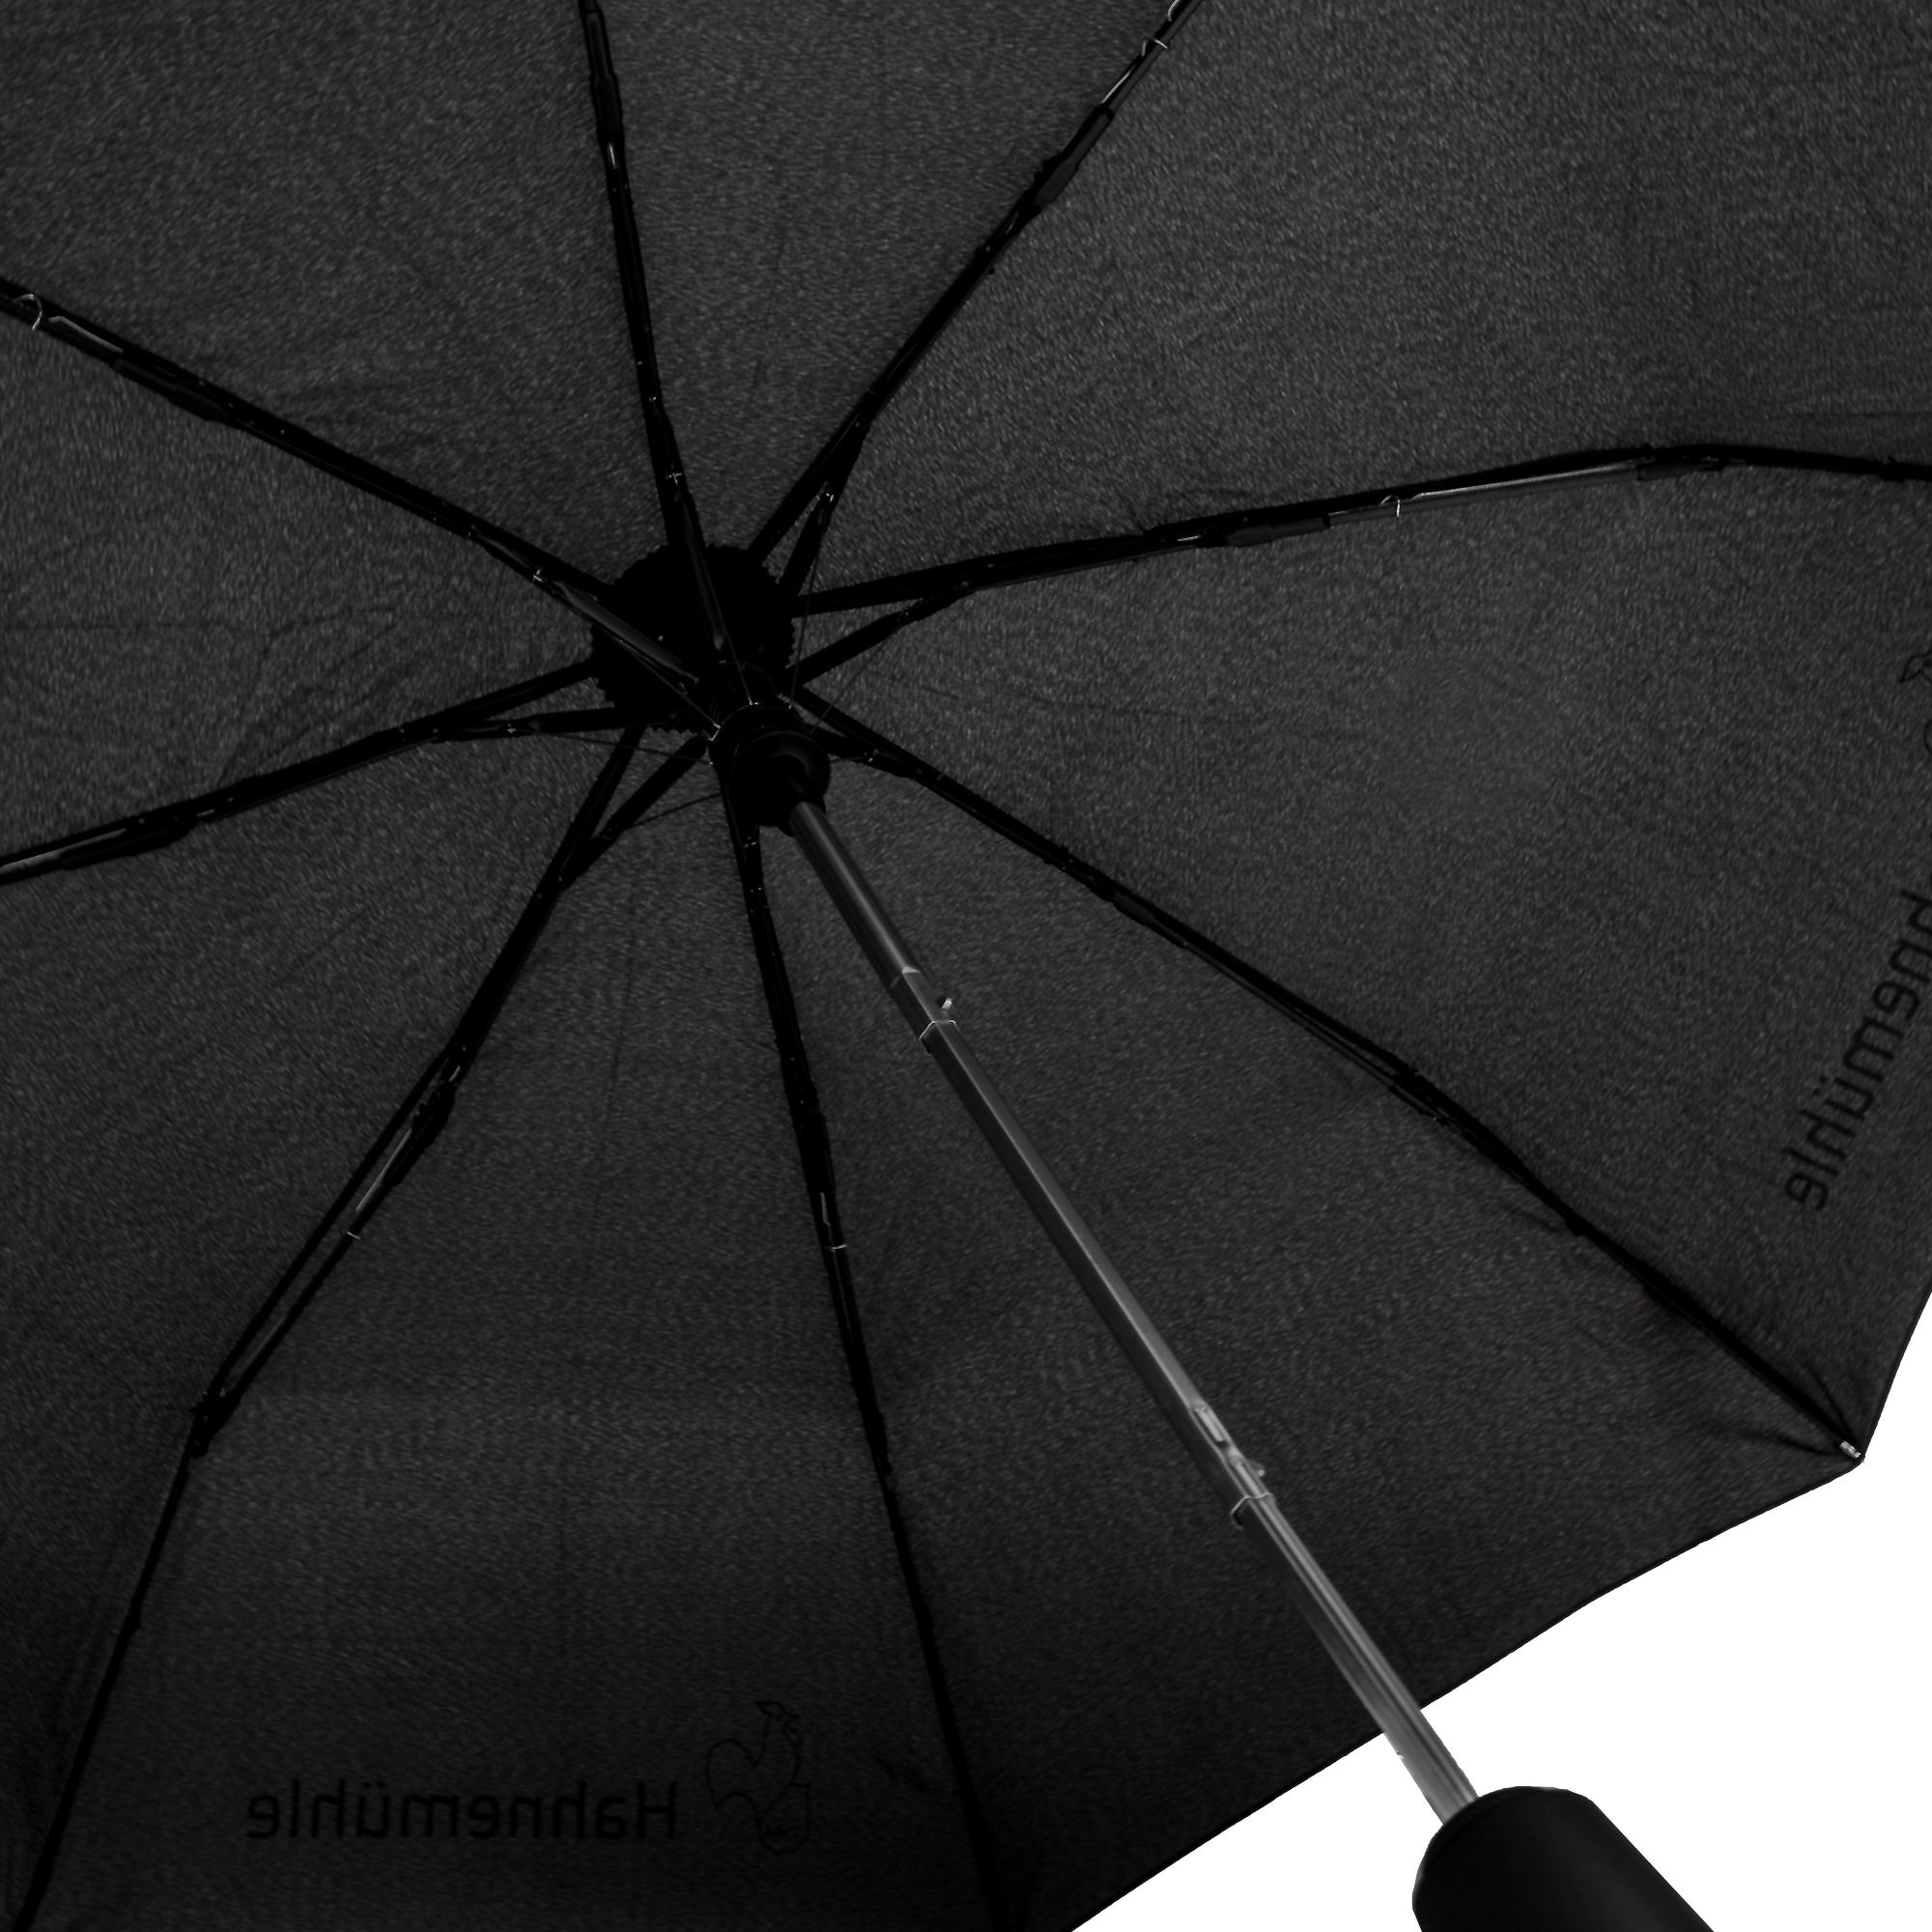 Hahnemühle Umbrella